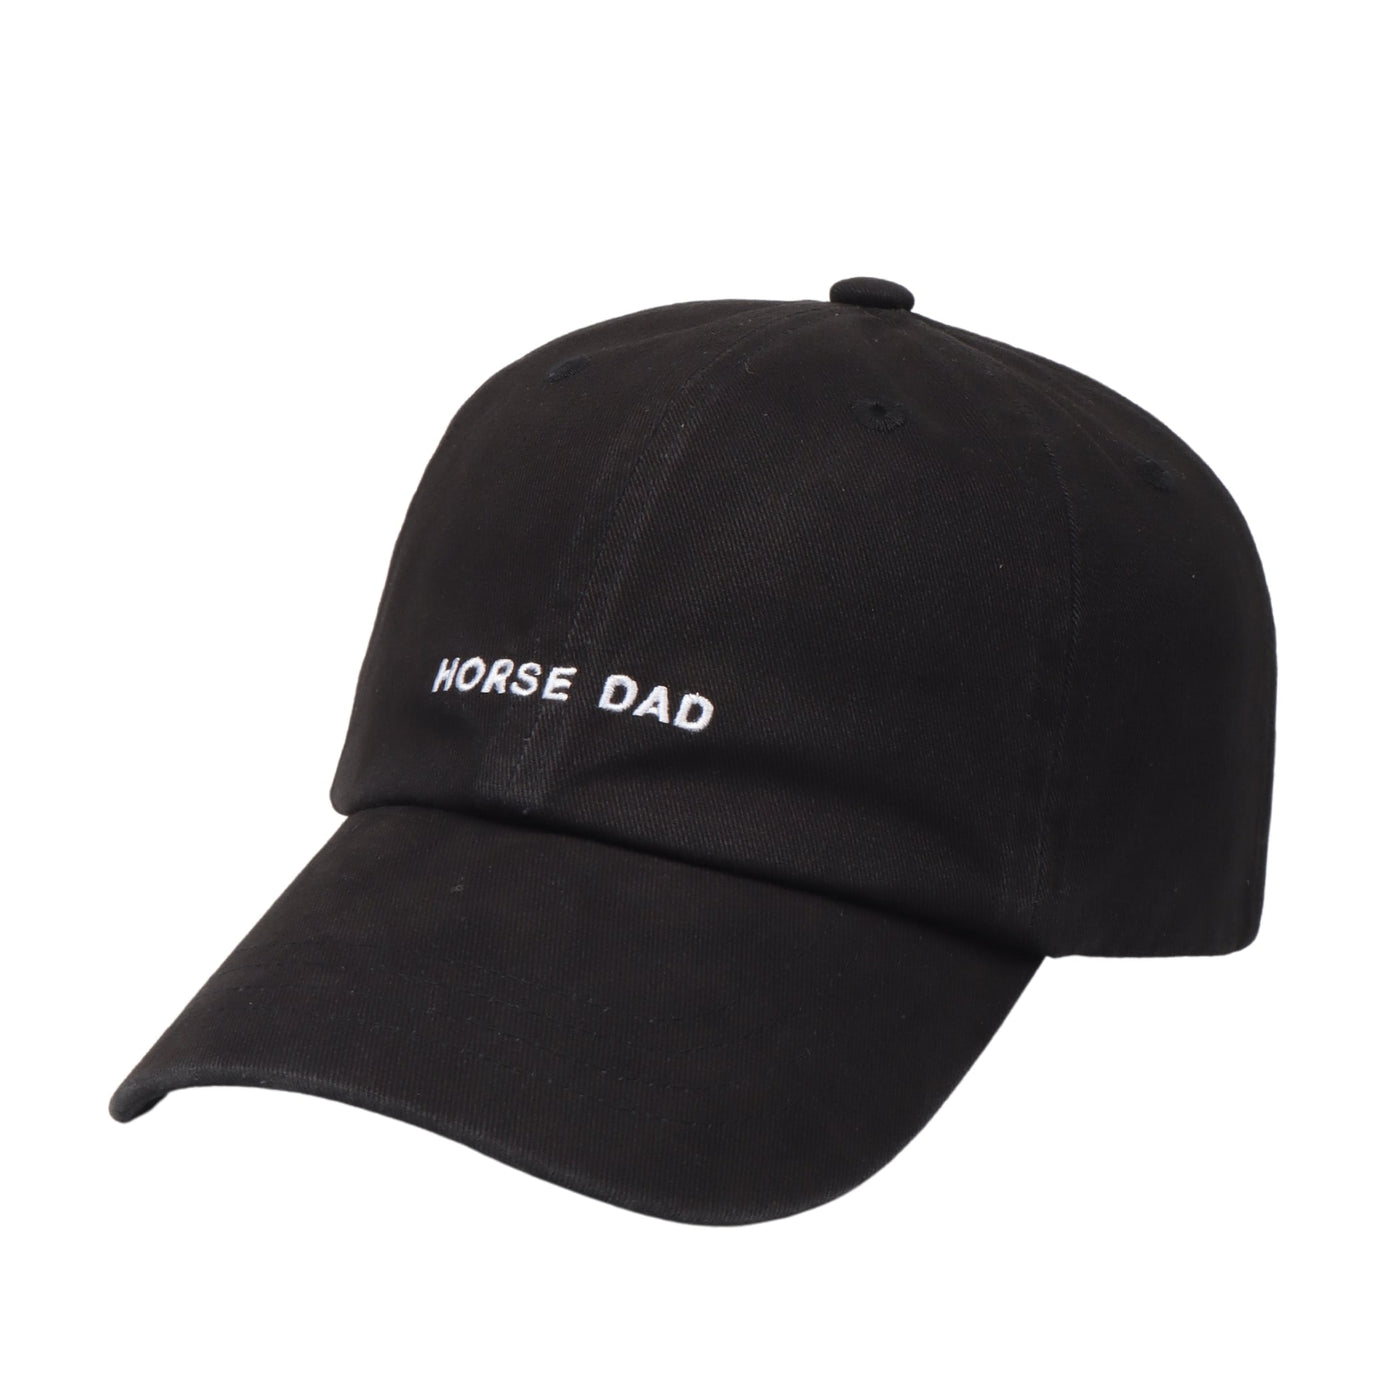 Hatphile Horse Dad Black Soft Baseball Cap